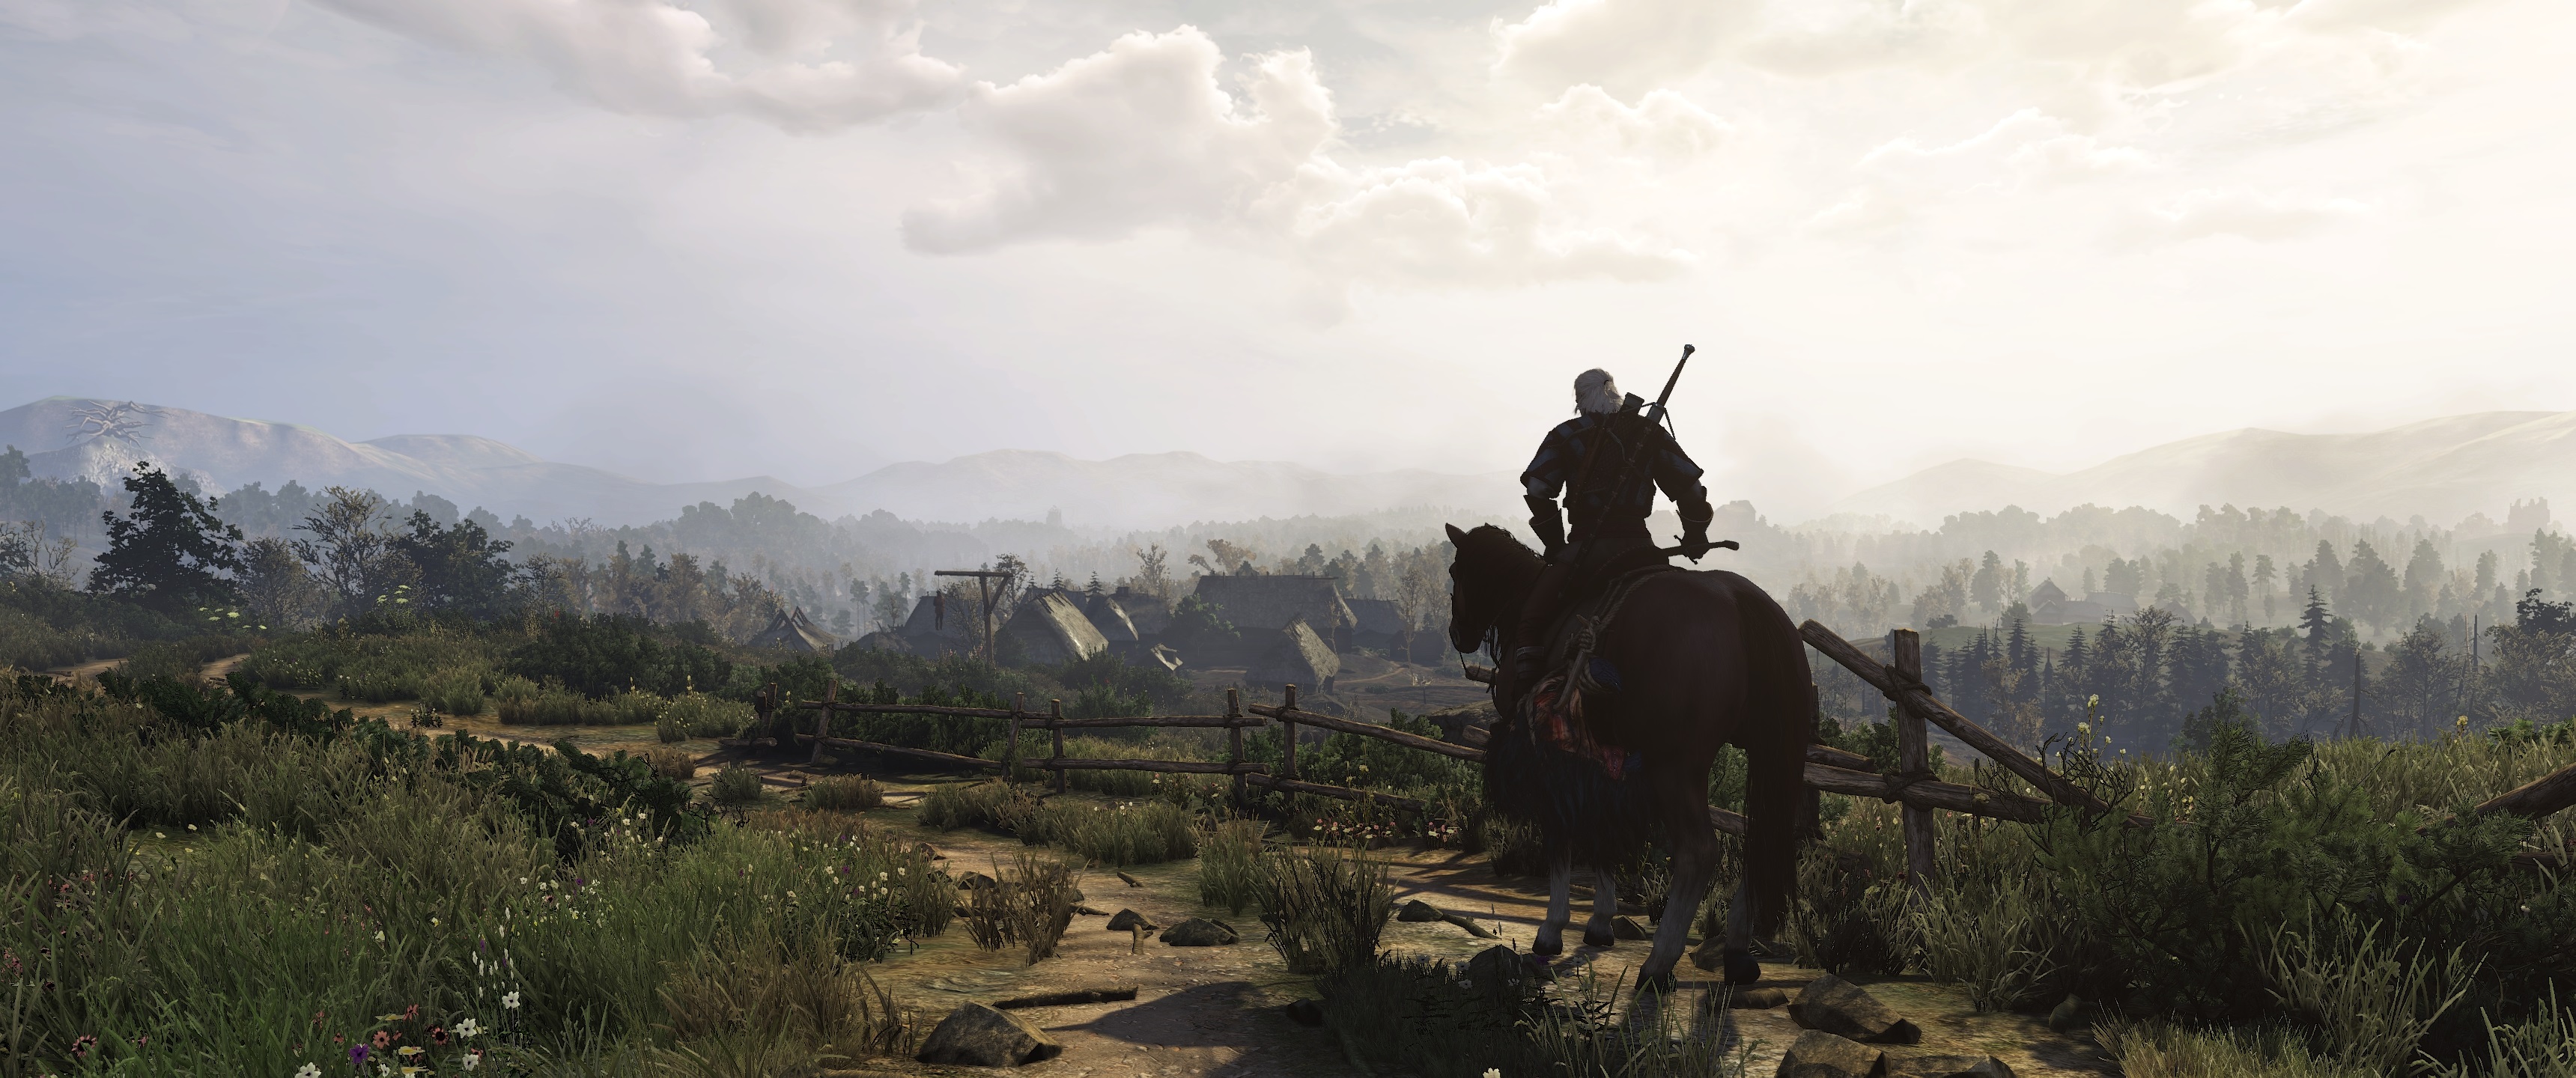 General 3440x1440 The Witcher 3: Wild Hunt Geralt of Rivia video games Velen screen shot RPG PC gaming video game landscape